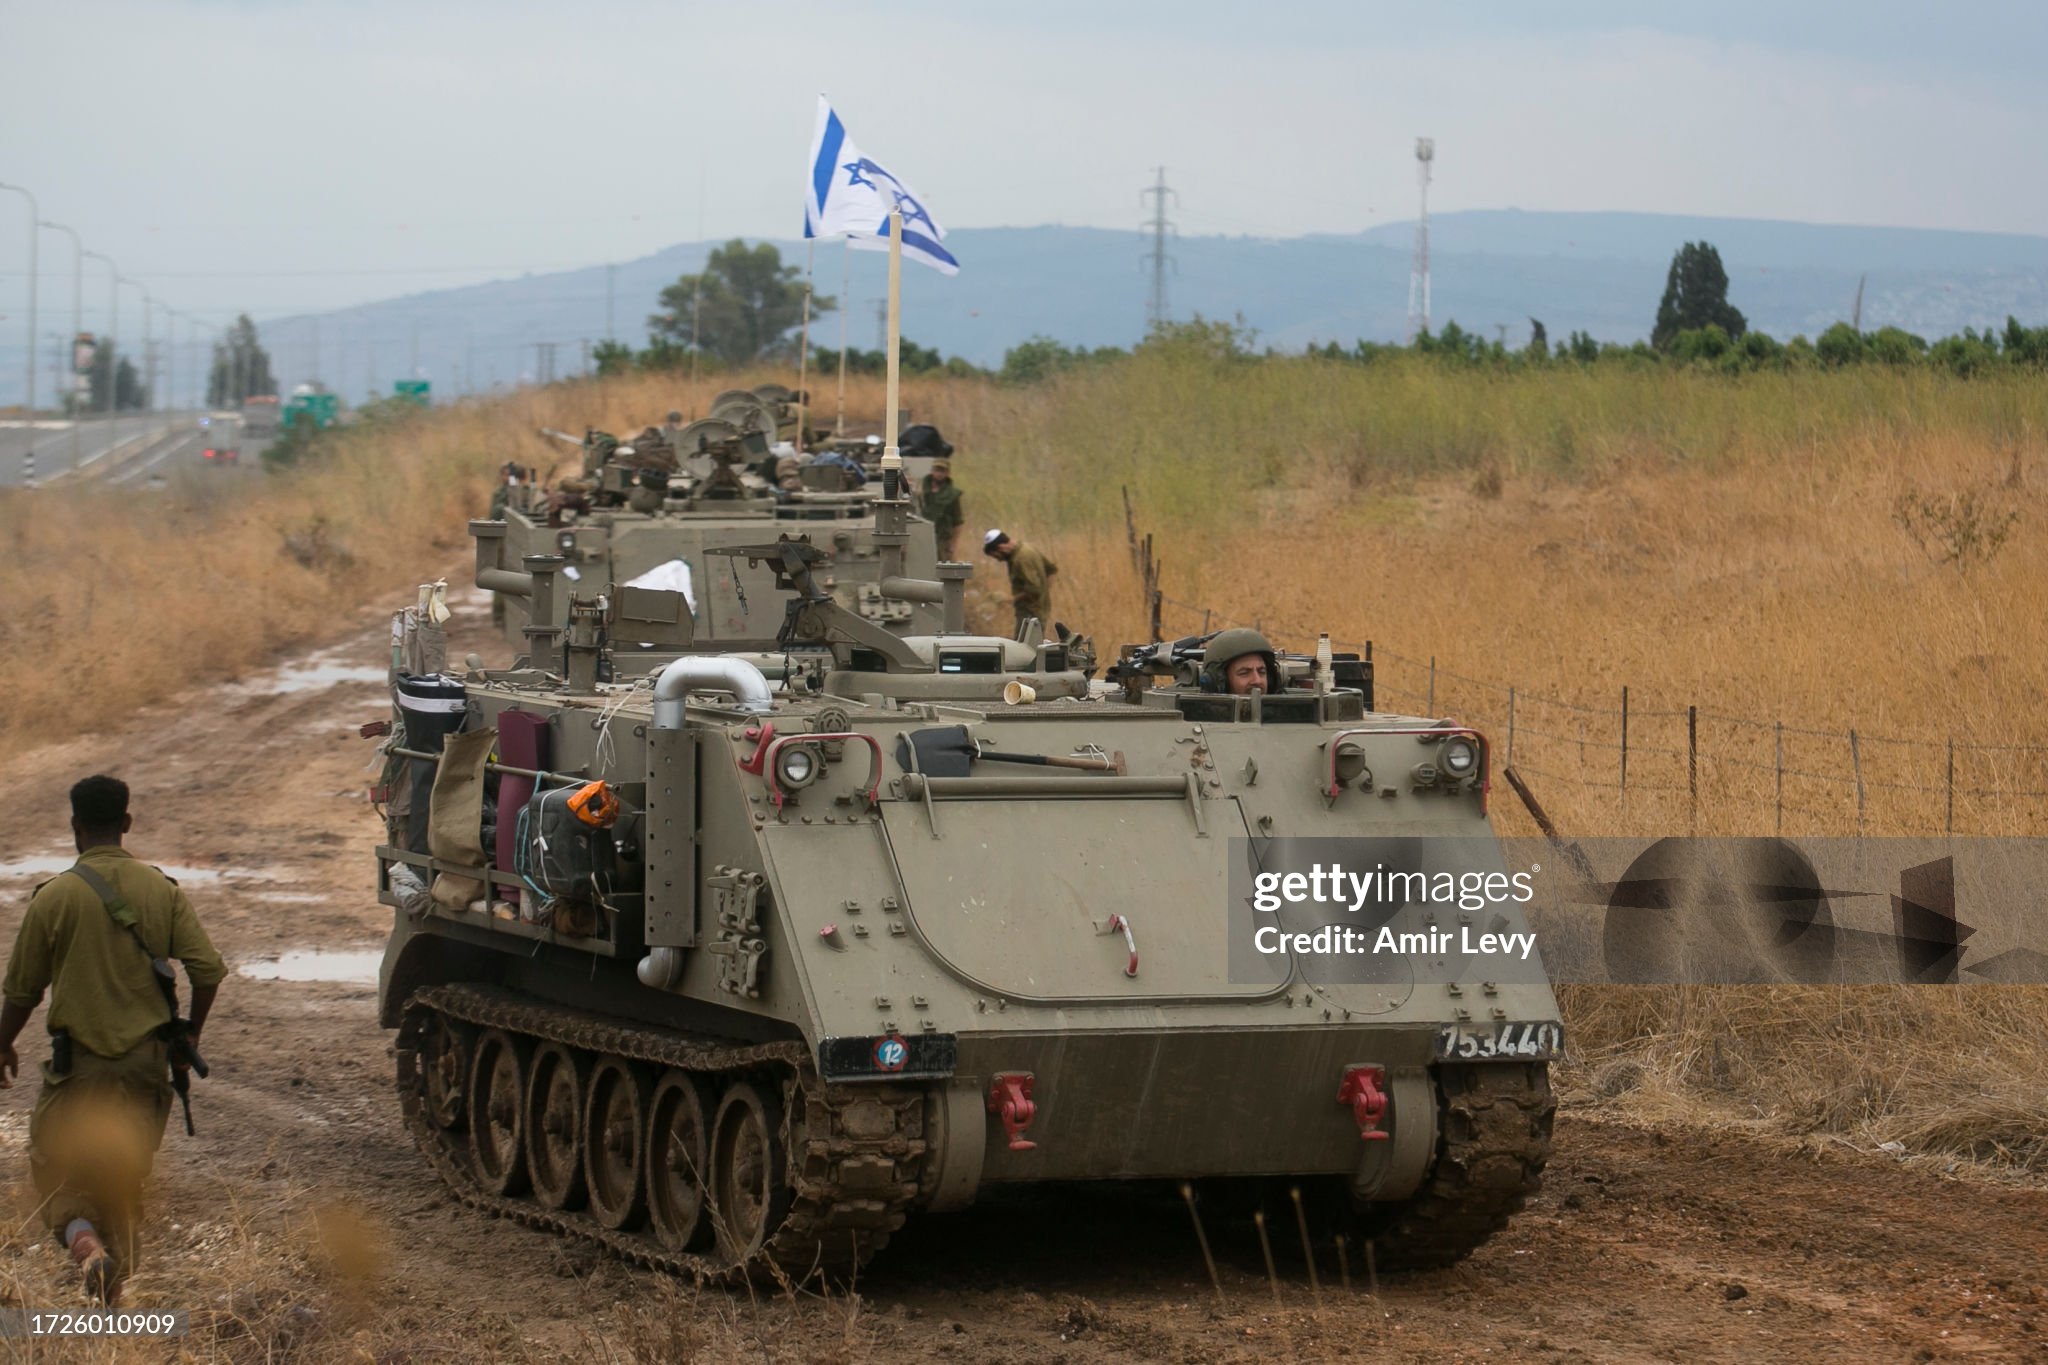 israeli-armor-personnel-carriers-move-in-formation-near-the-israeli-border-with-lebanon-on.jpg?s=2048x2048&w=gi&k=20&c=ZXmUA2Ntn-qA1SFgnVuvHtYdCy1gF28NaMHEWEUrgLk=